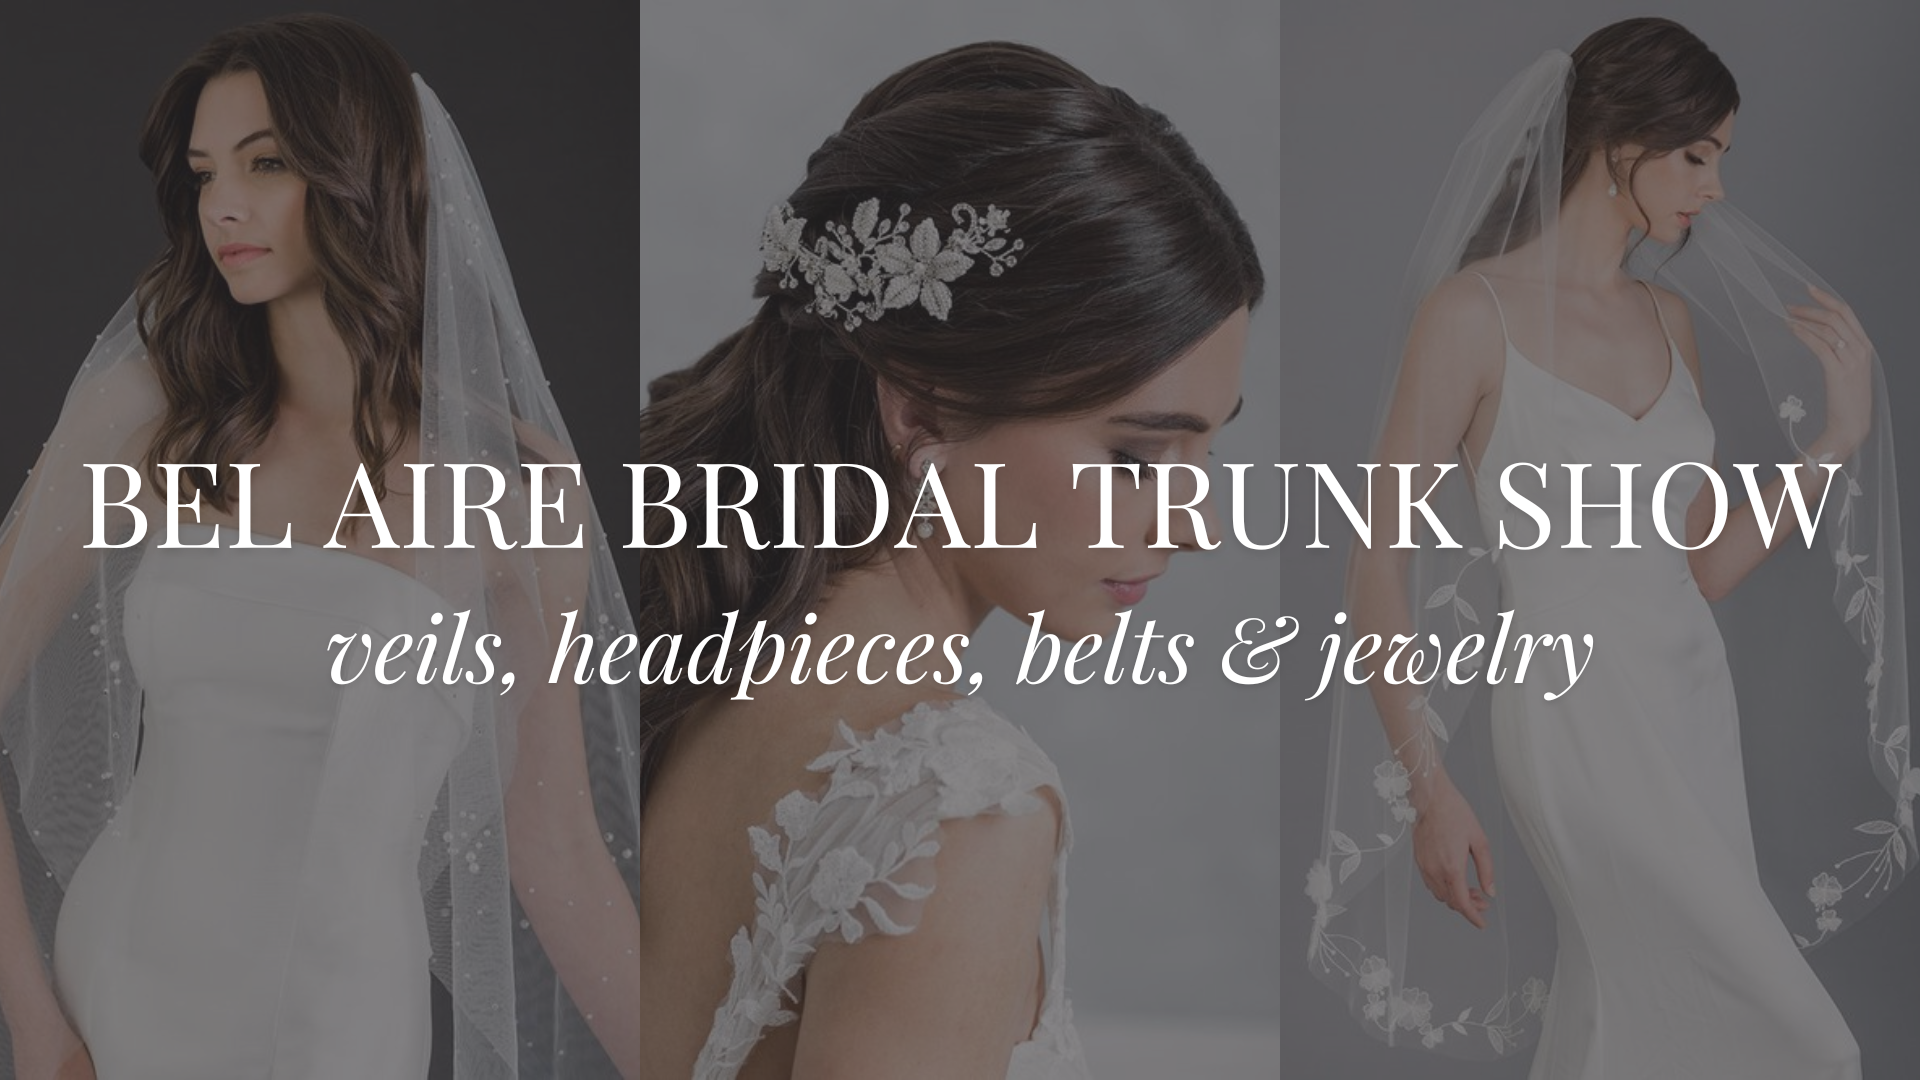 Models Showcasing Bridal Veils and Headpieces